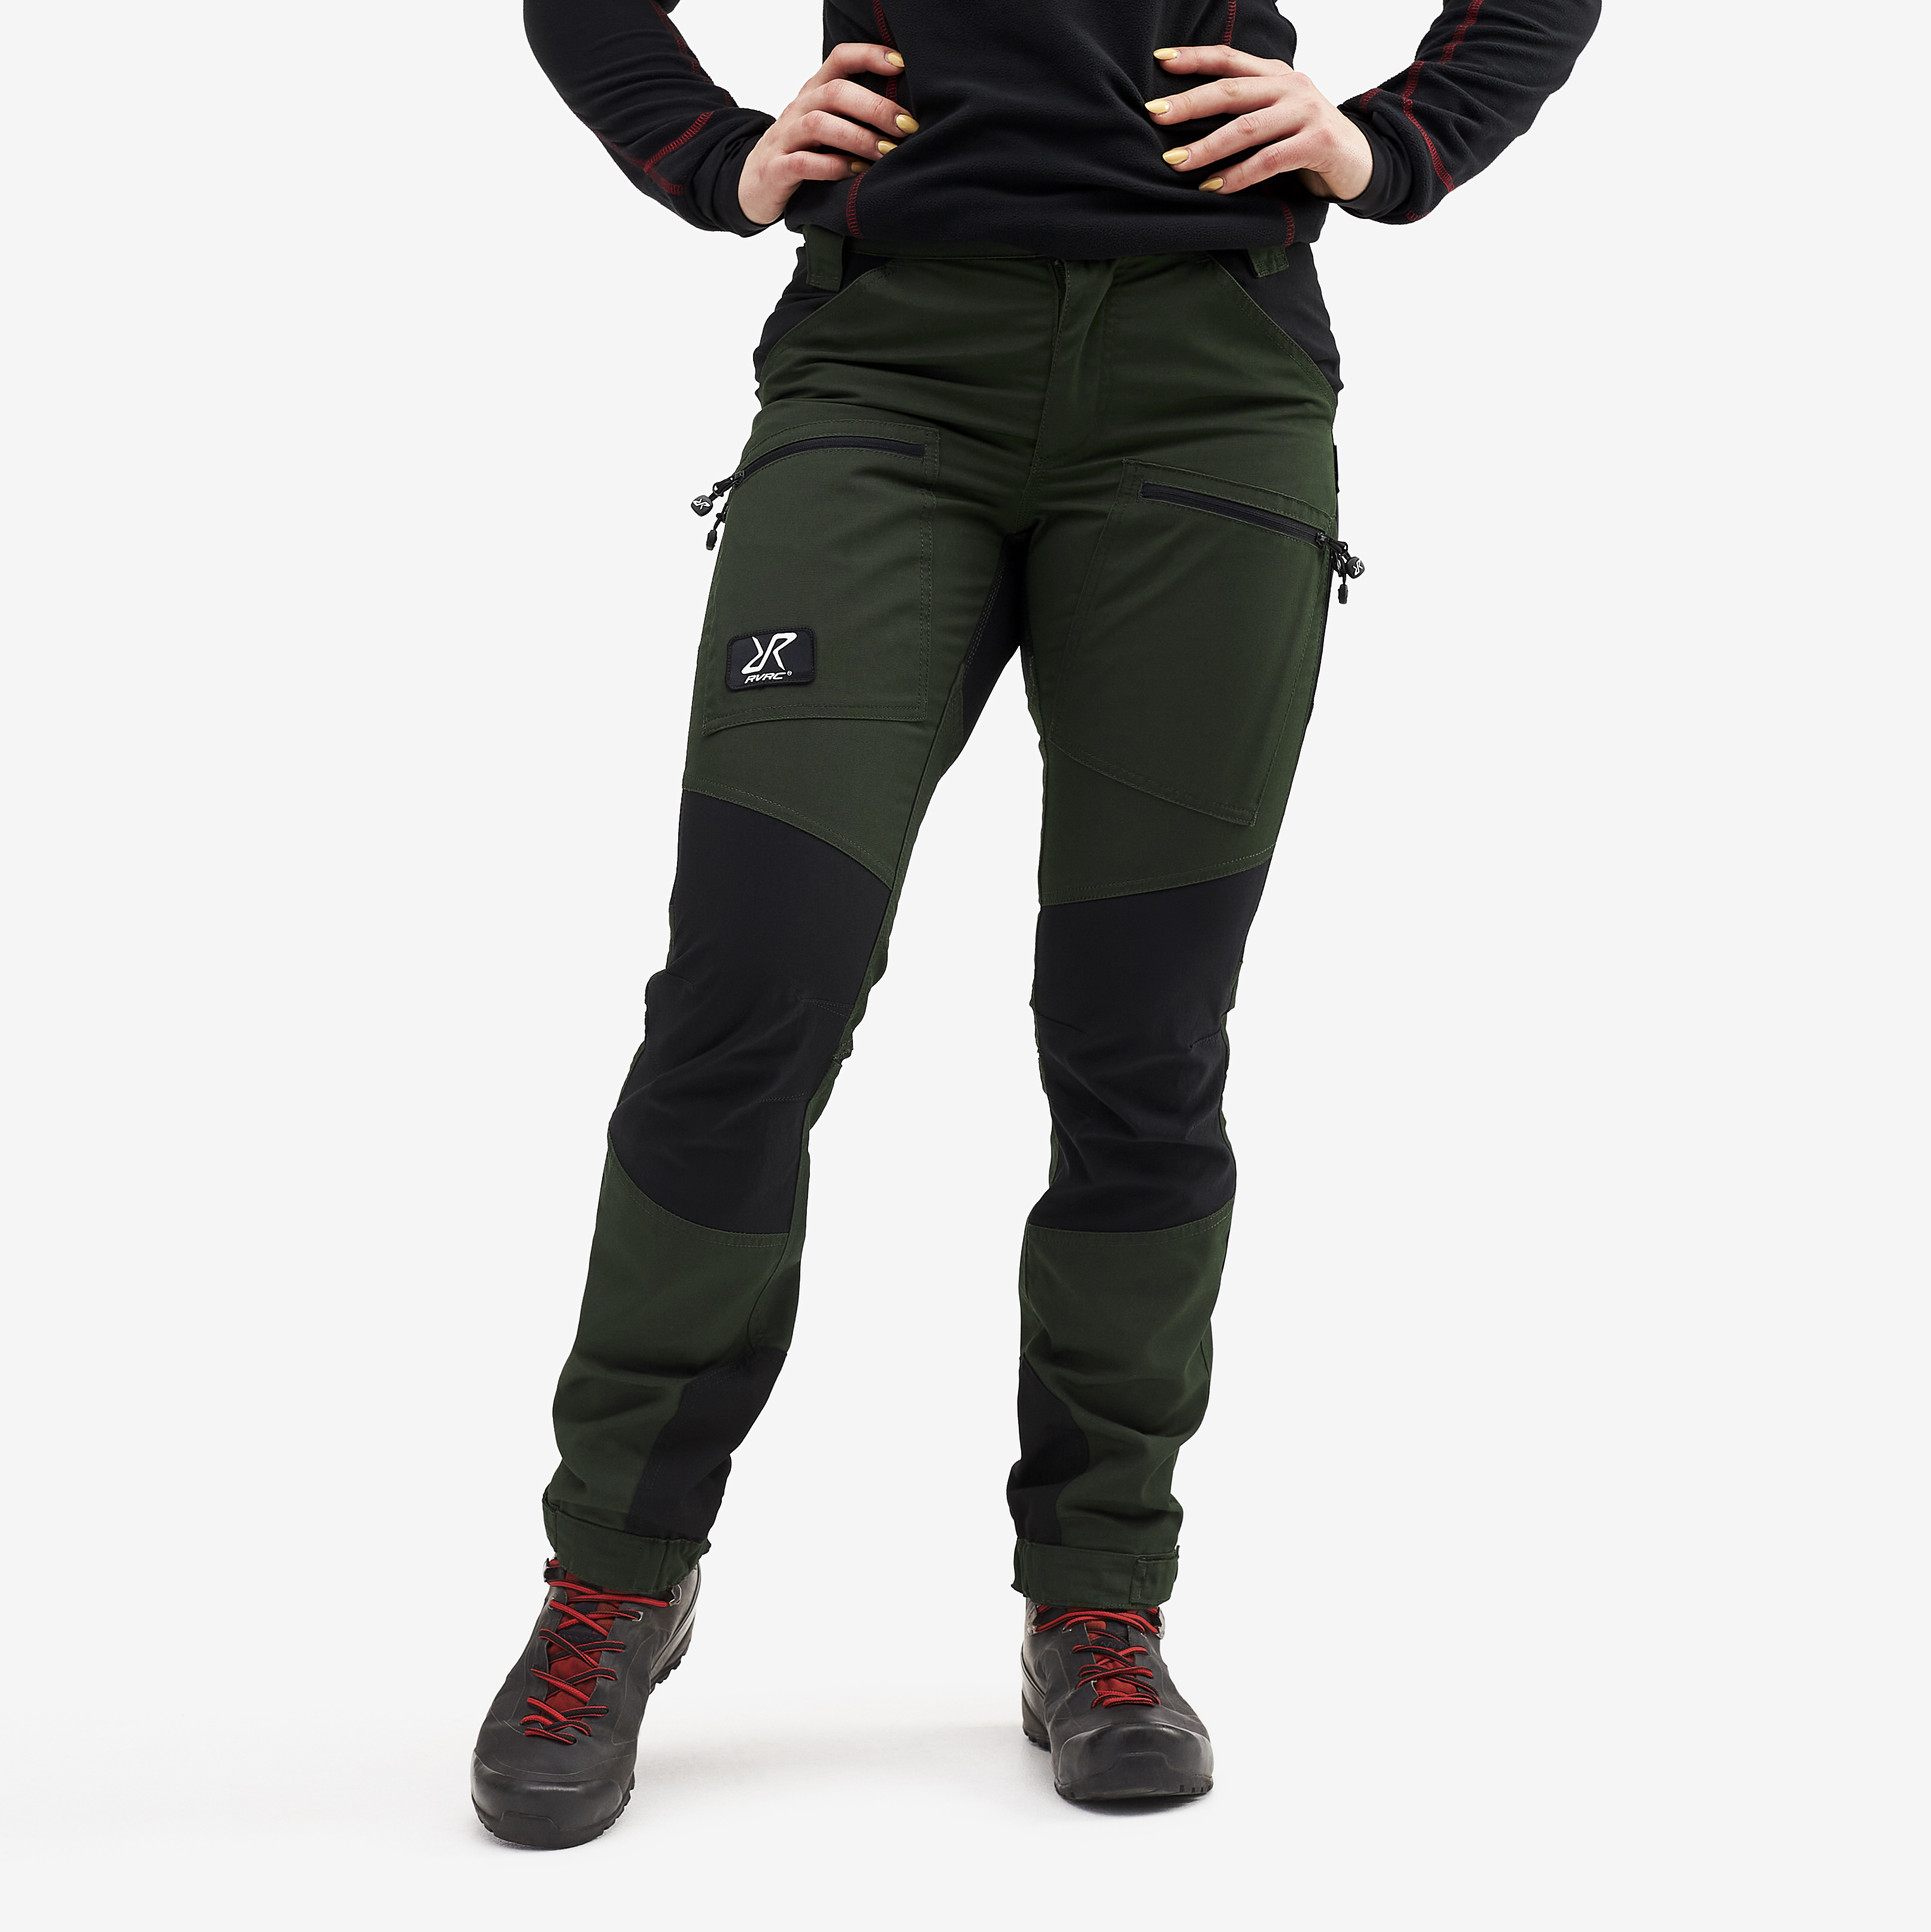 Nordwand Pro Short vandrebukser for kvinder i grøn